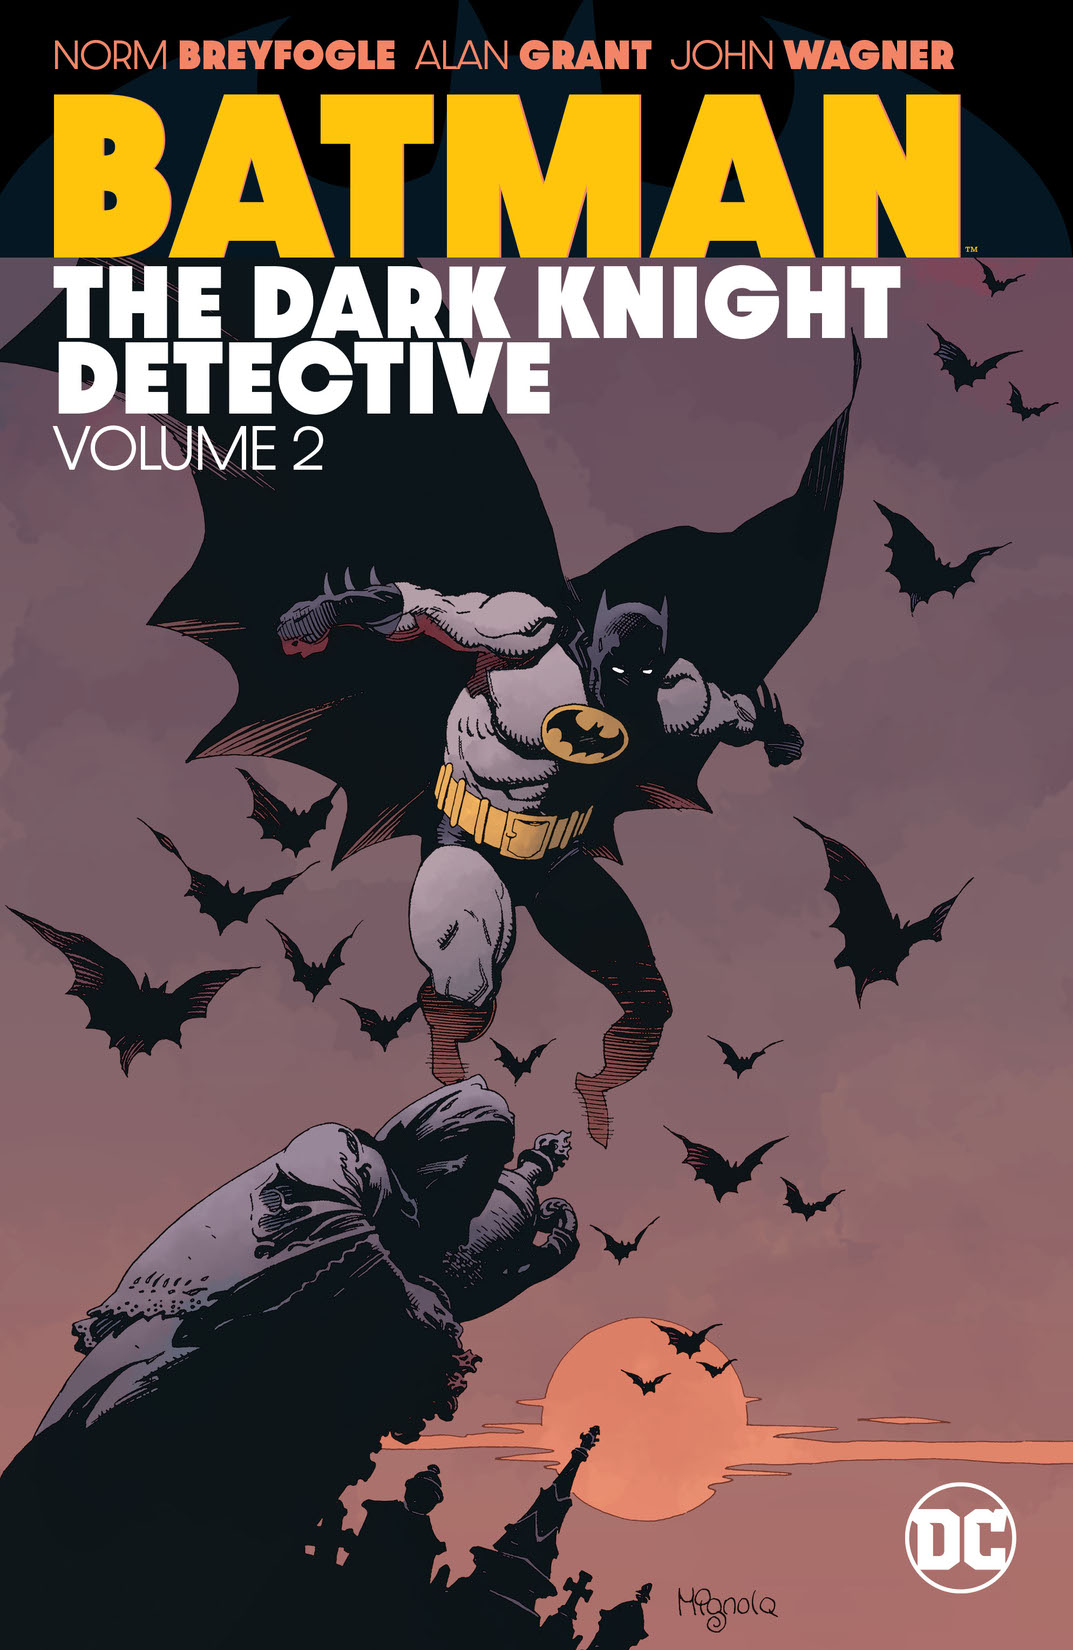 Batman The Dark Knight Detective Vol. 2  preview images